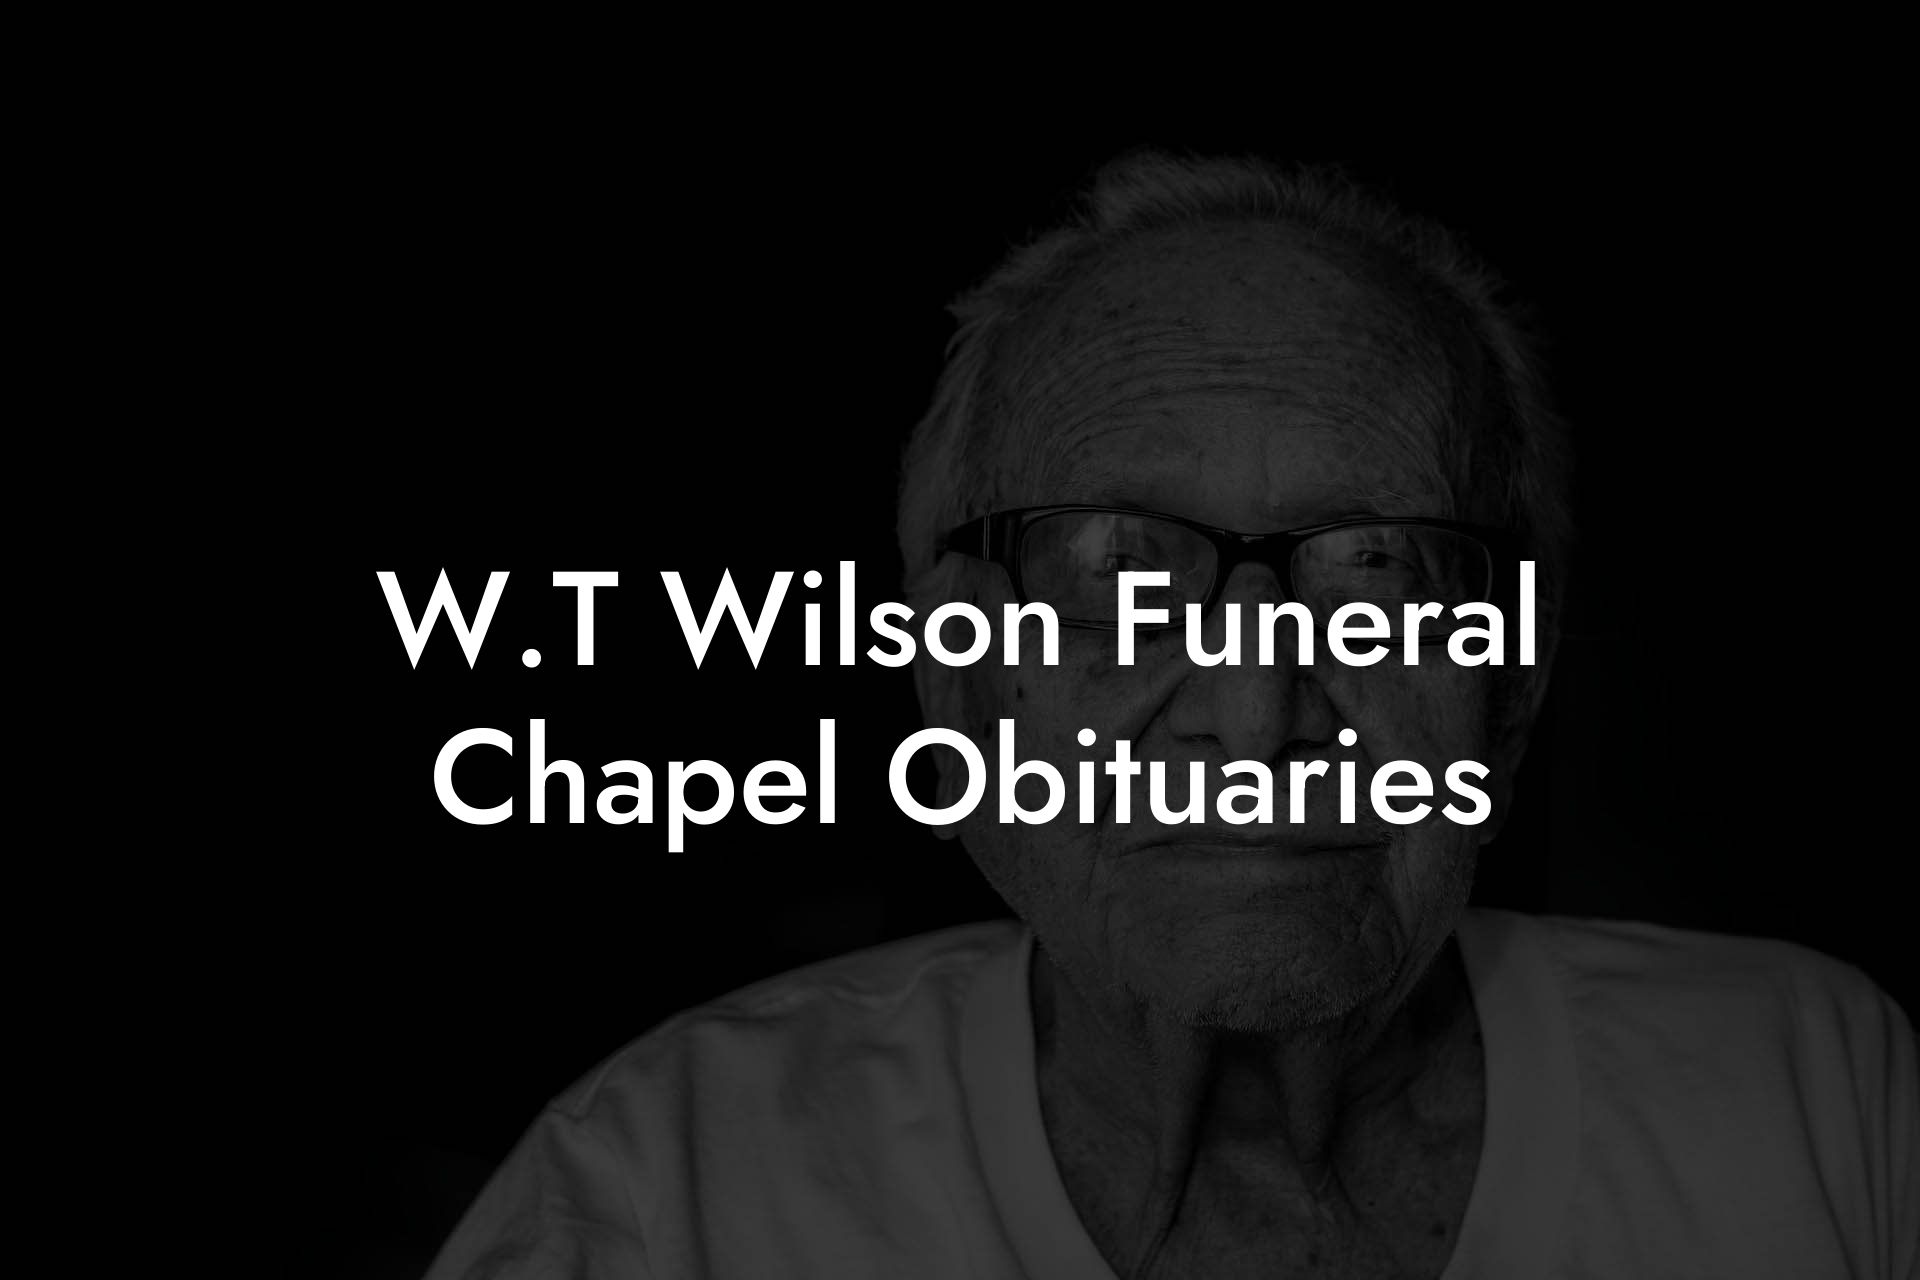 W.T Wilson Funeral Chapel Obituaries